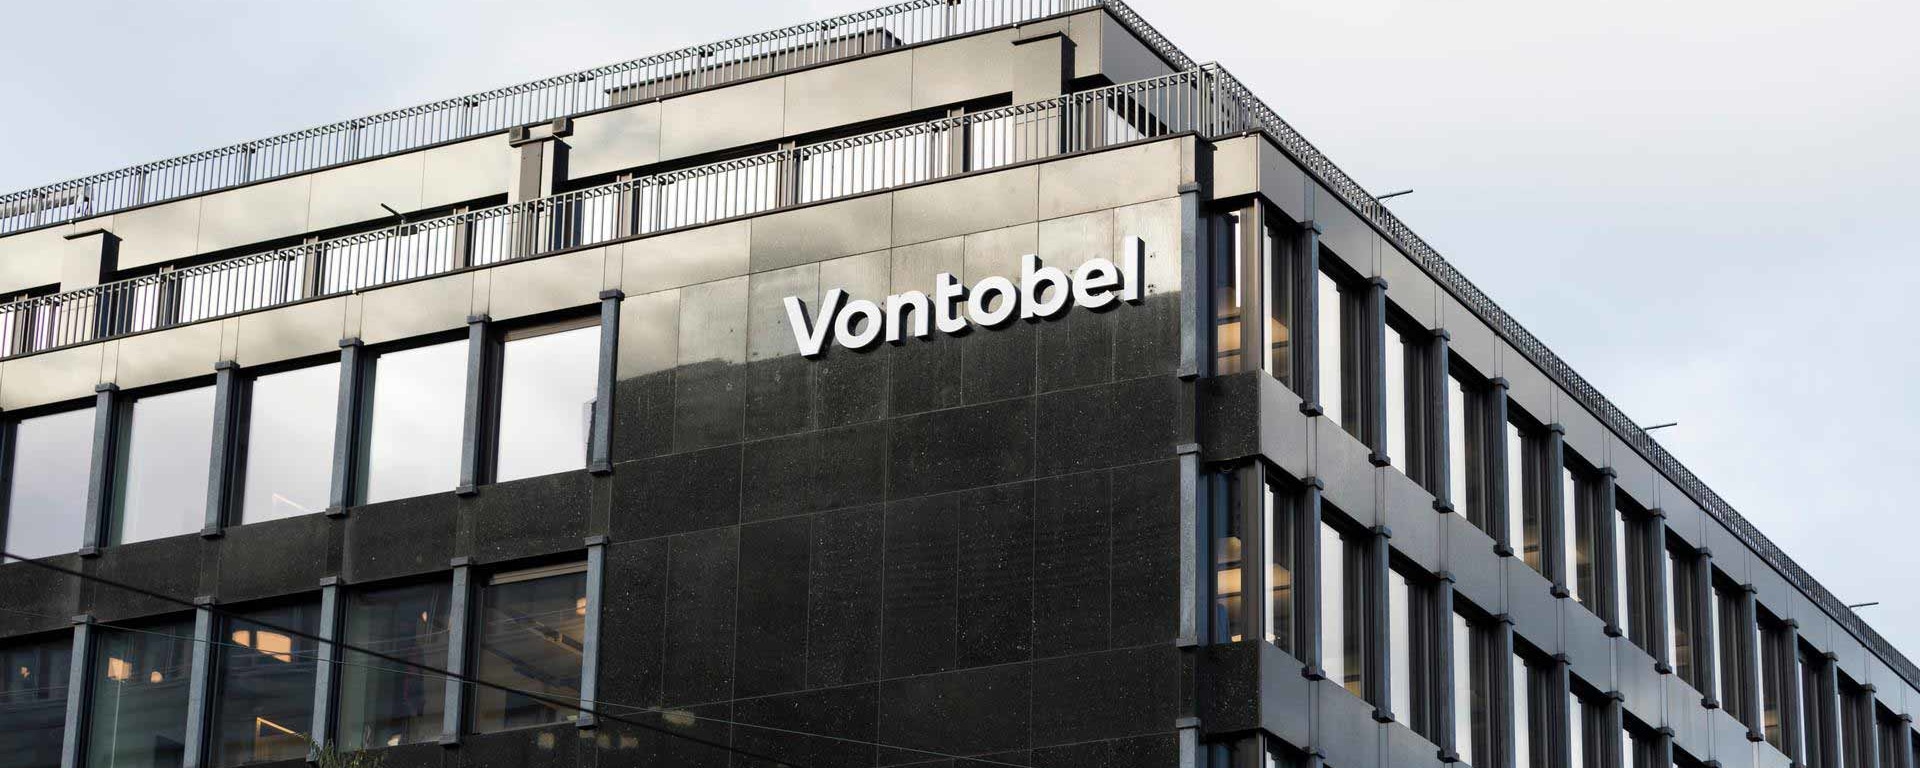 The building of Bank Vontobel - exterior view